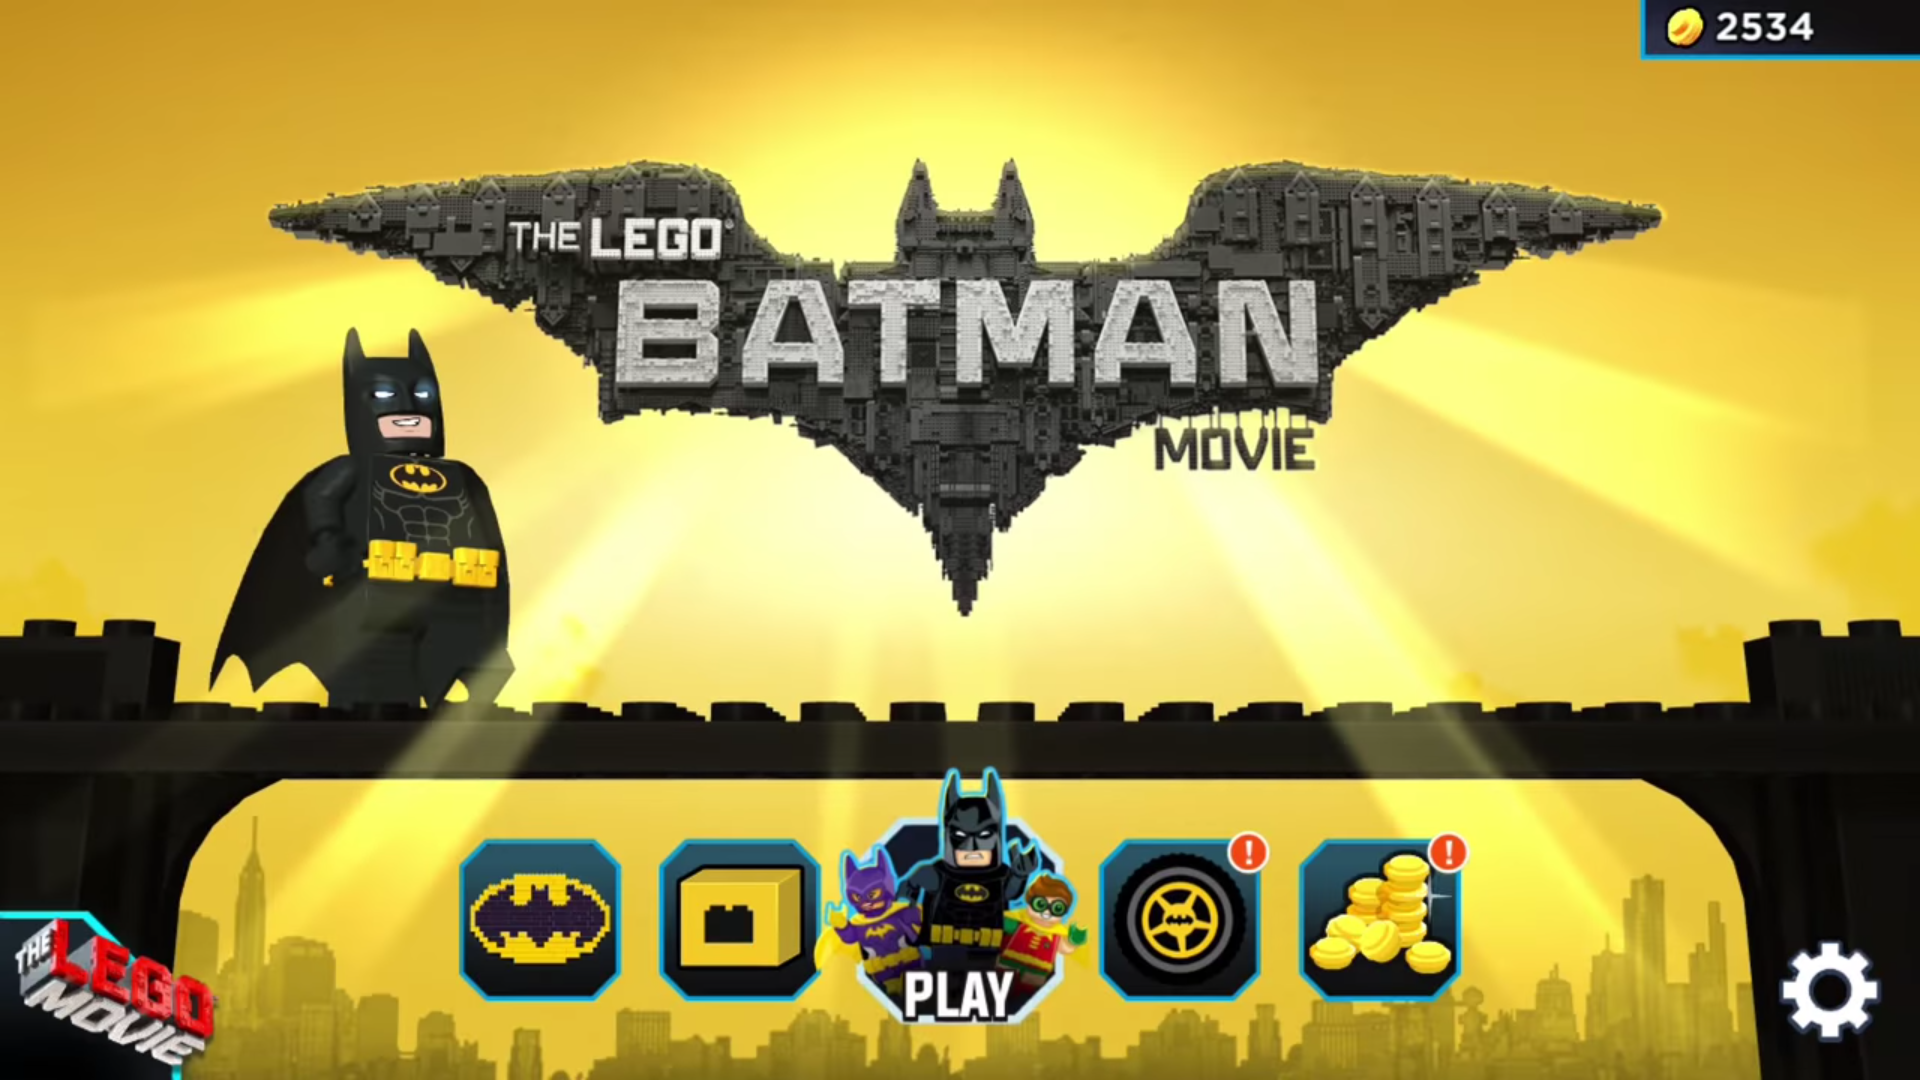 The Batman Universe – Lego Batman Movie Gets App Ahead of Release1920 x 1080